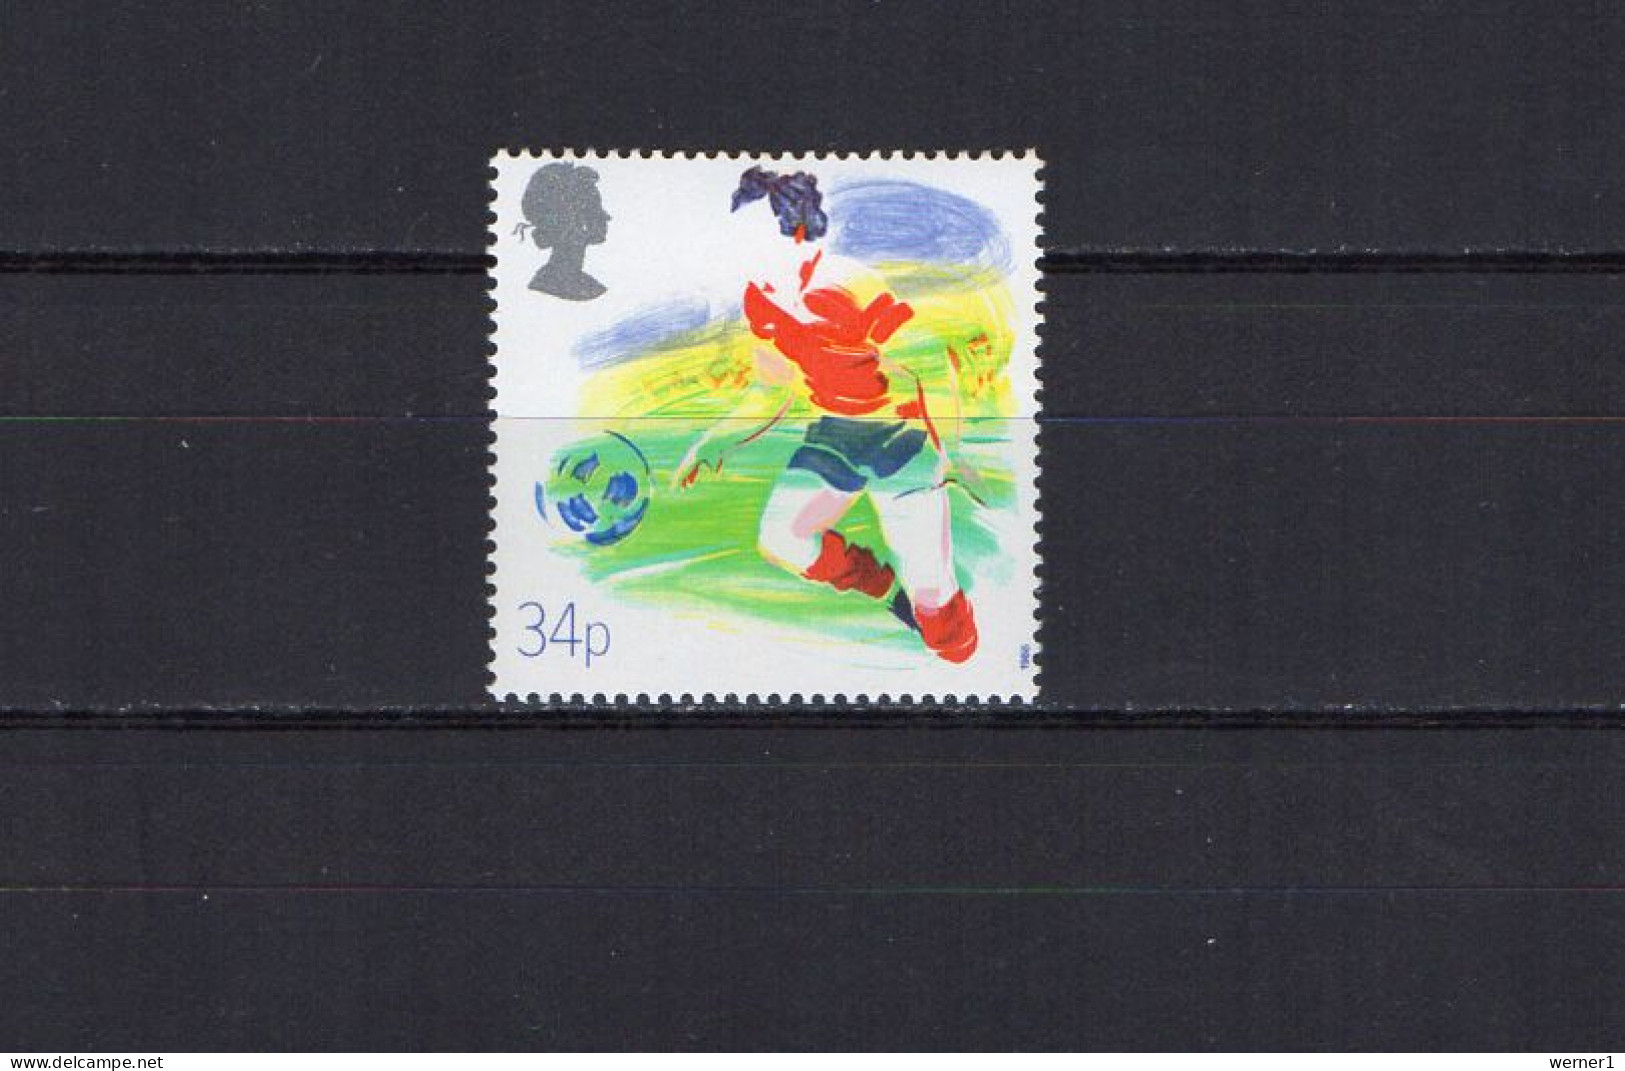 UK England, Great Britain 1988 Football Soccer Stamp MNH - Nuevos